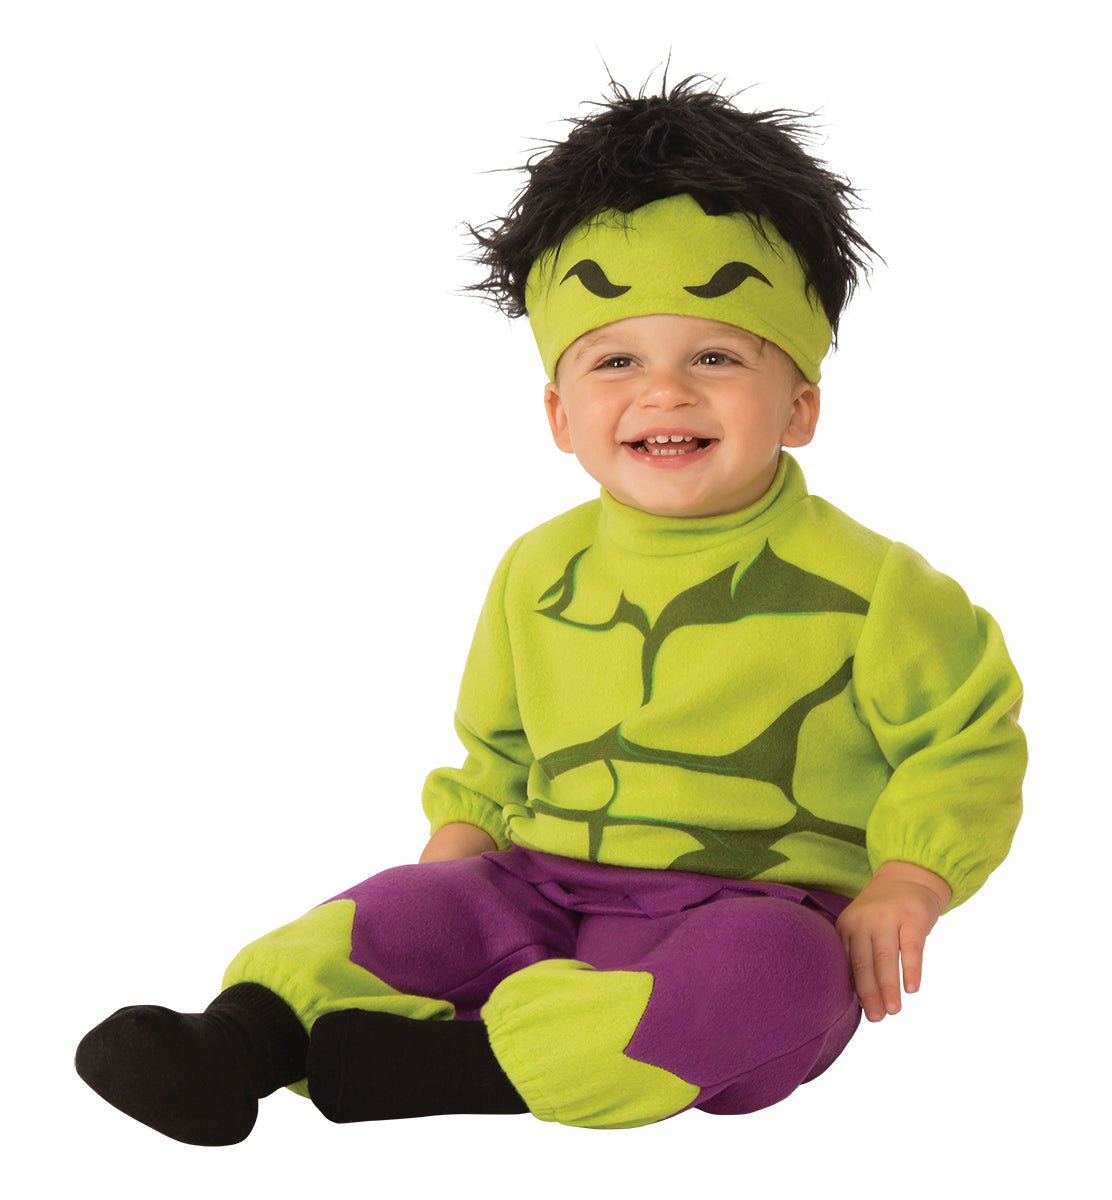 Costume Hulk Tutone - Mstore016 - Abiti Carnevale - Disney